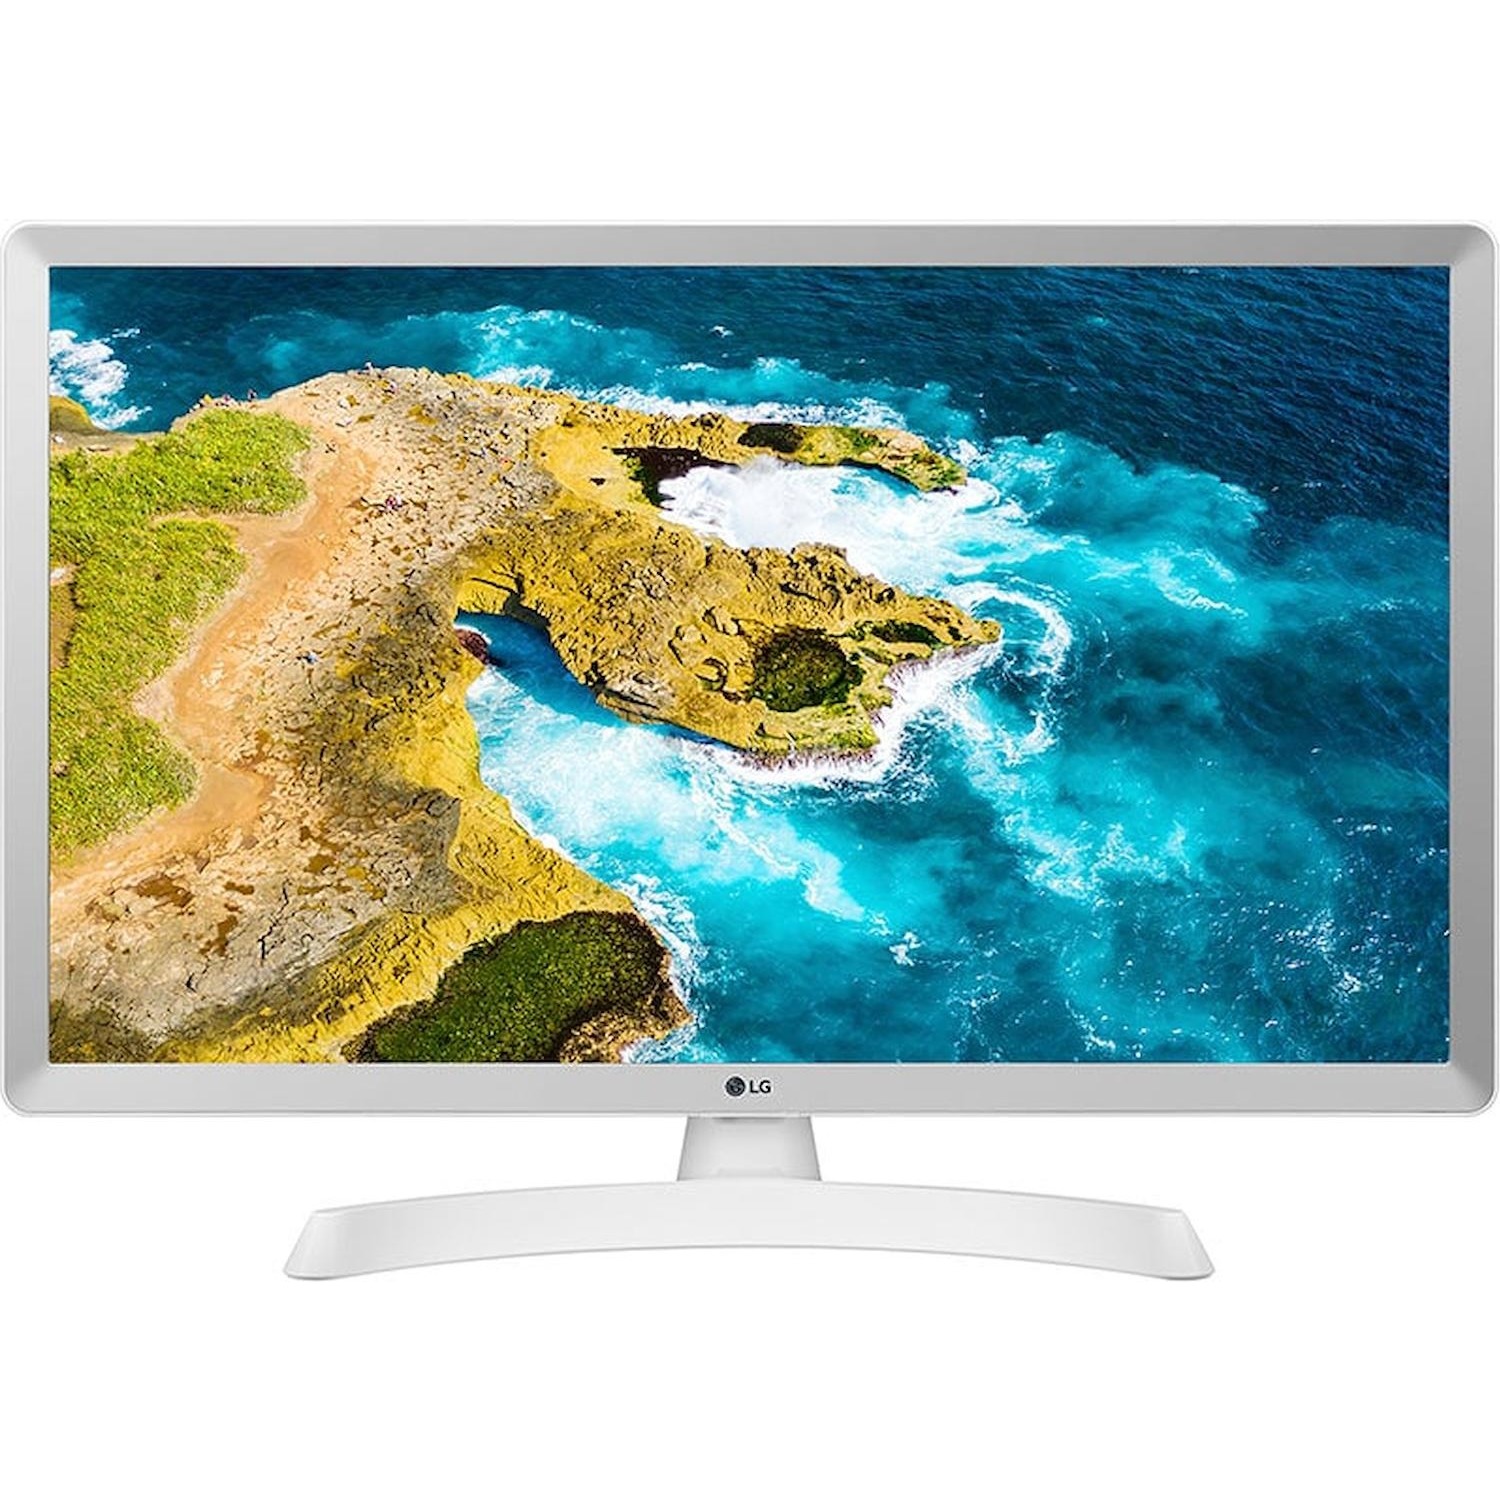 Immagine per TV LED Monitor Smart LG 28TQ515S-WZ bianco da DIMOStore